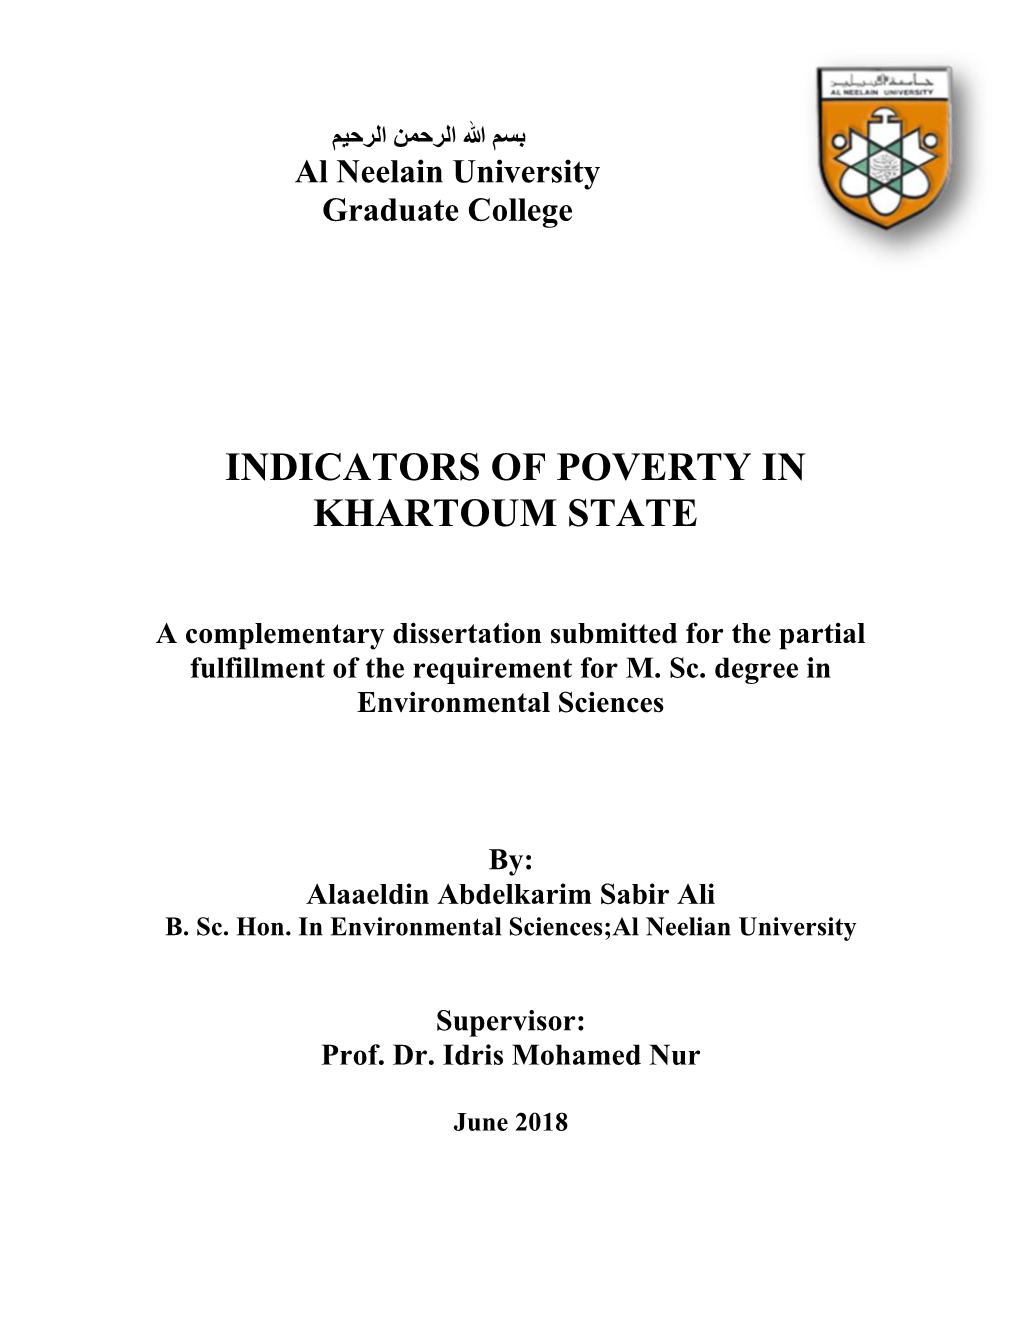 Indicators of Poverty in Khartoum State